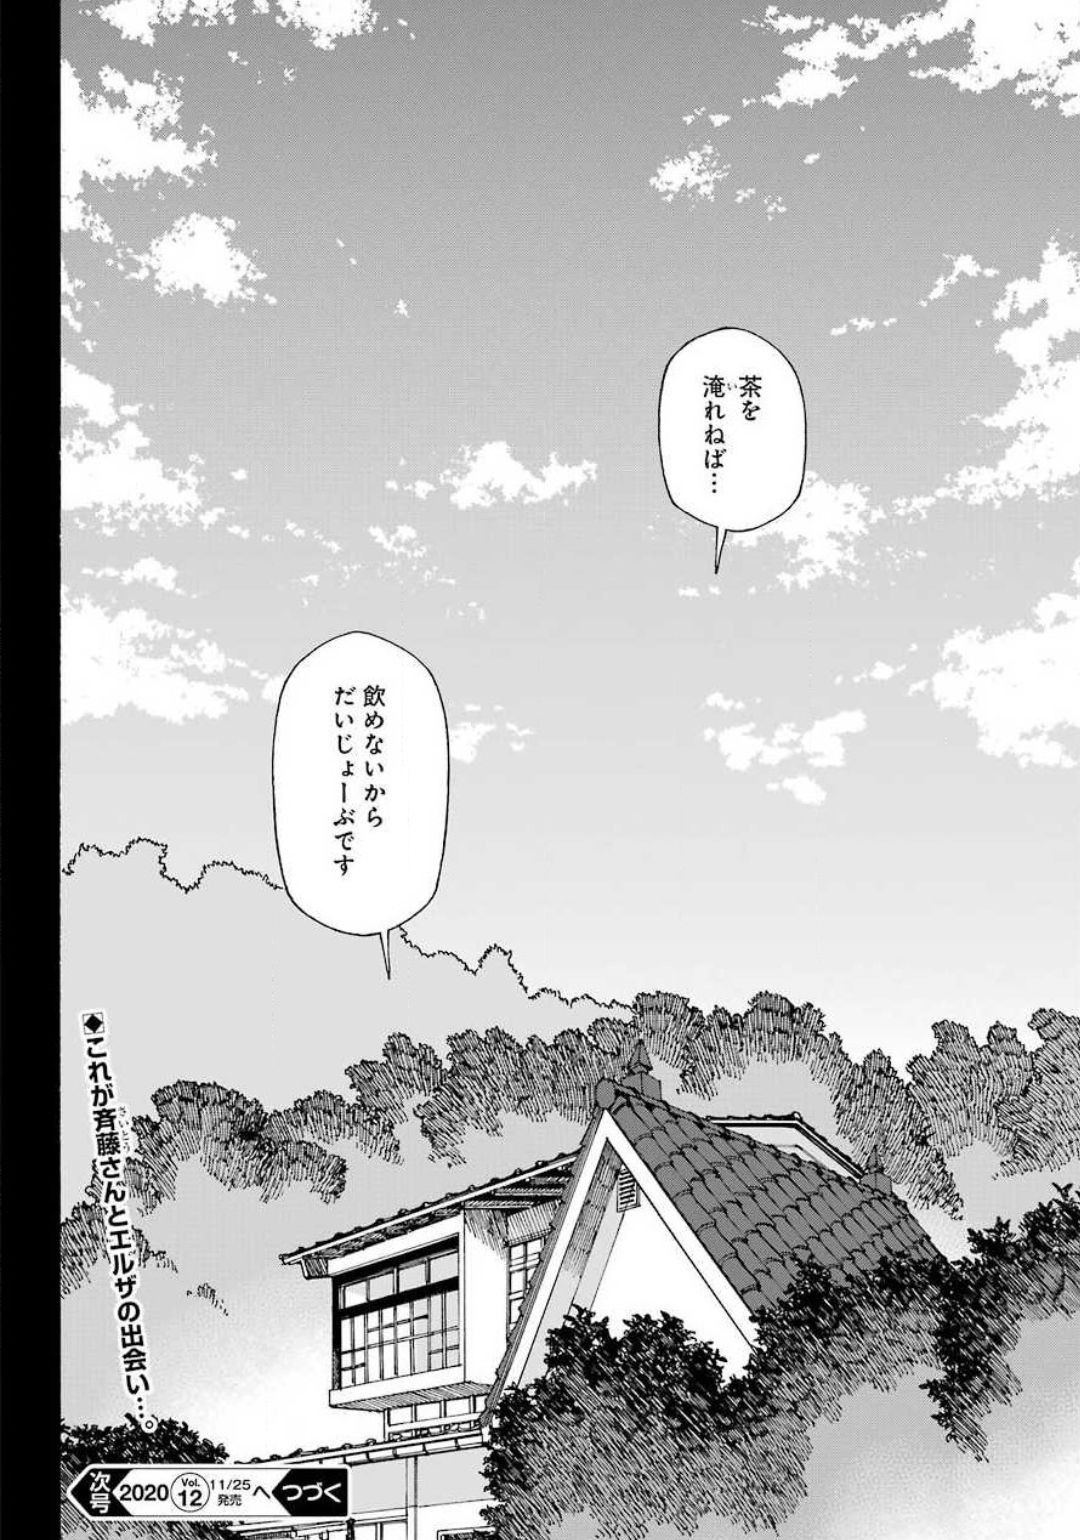 Hotomeku-kakashi - Chapter 07-1 - Page 10